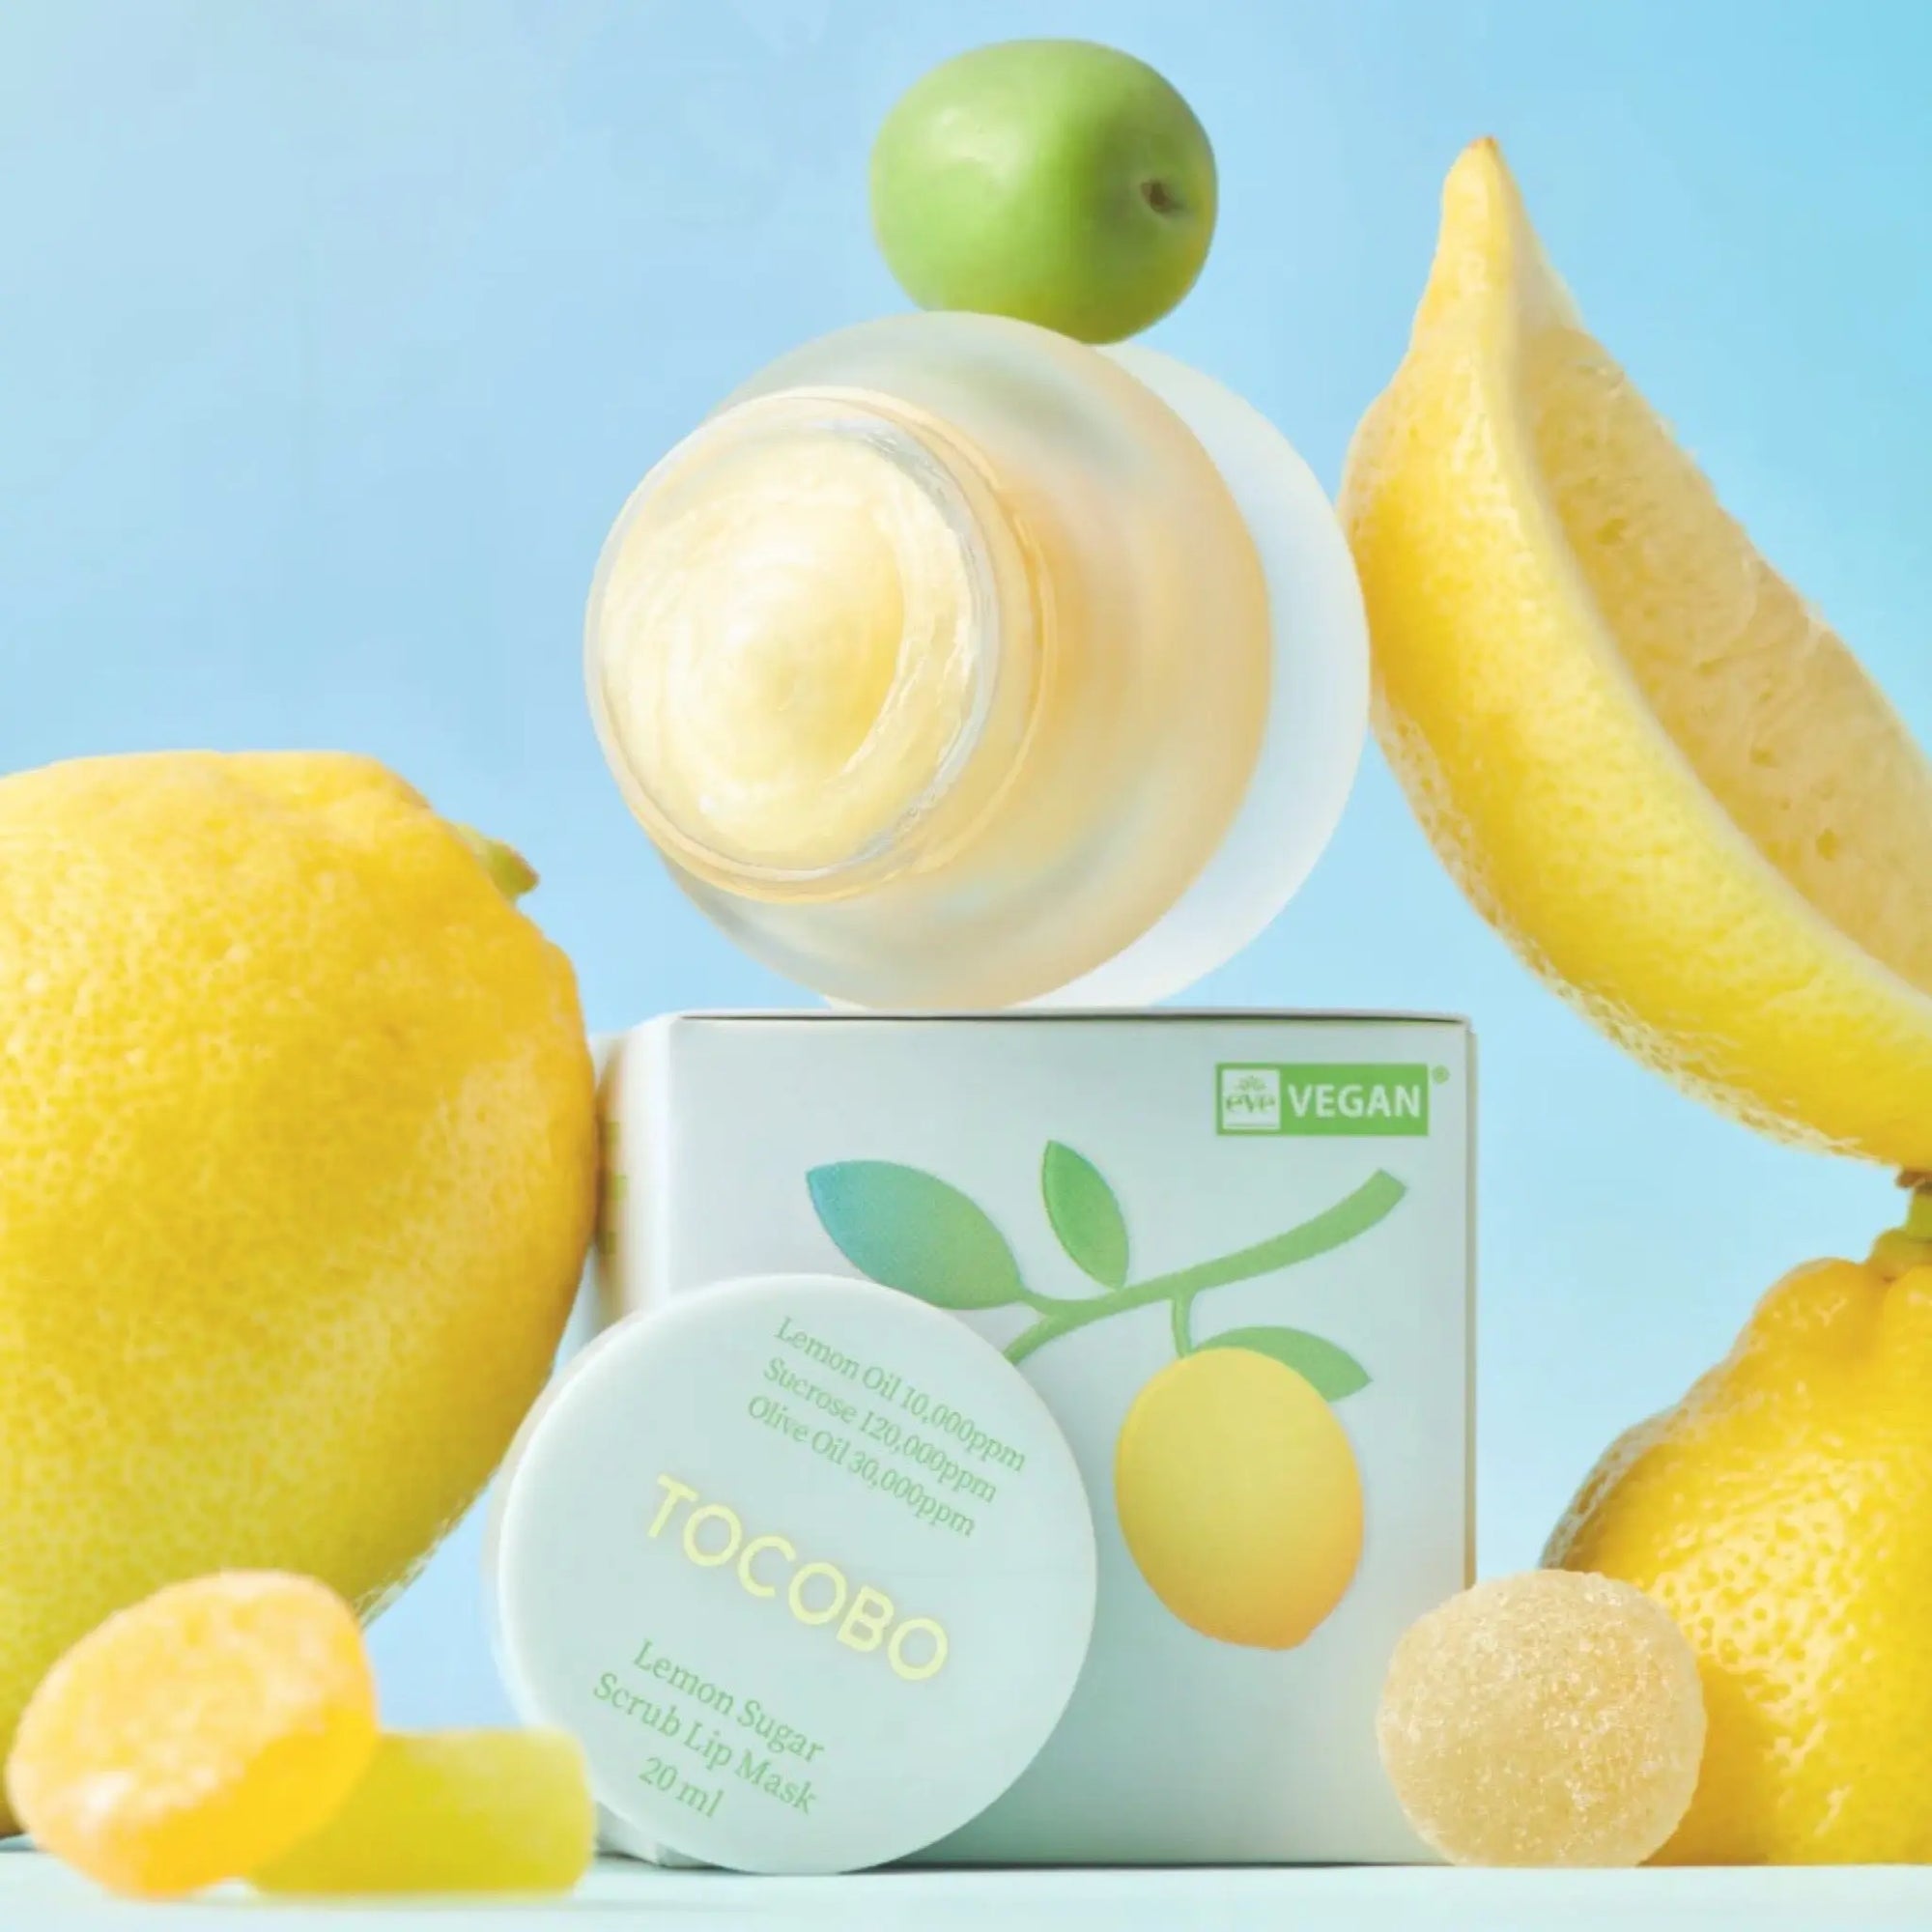 Tocobo - Lemon Sugar Scrub Lip Mask 20mL Tocobo